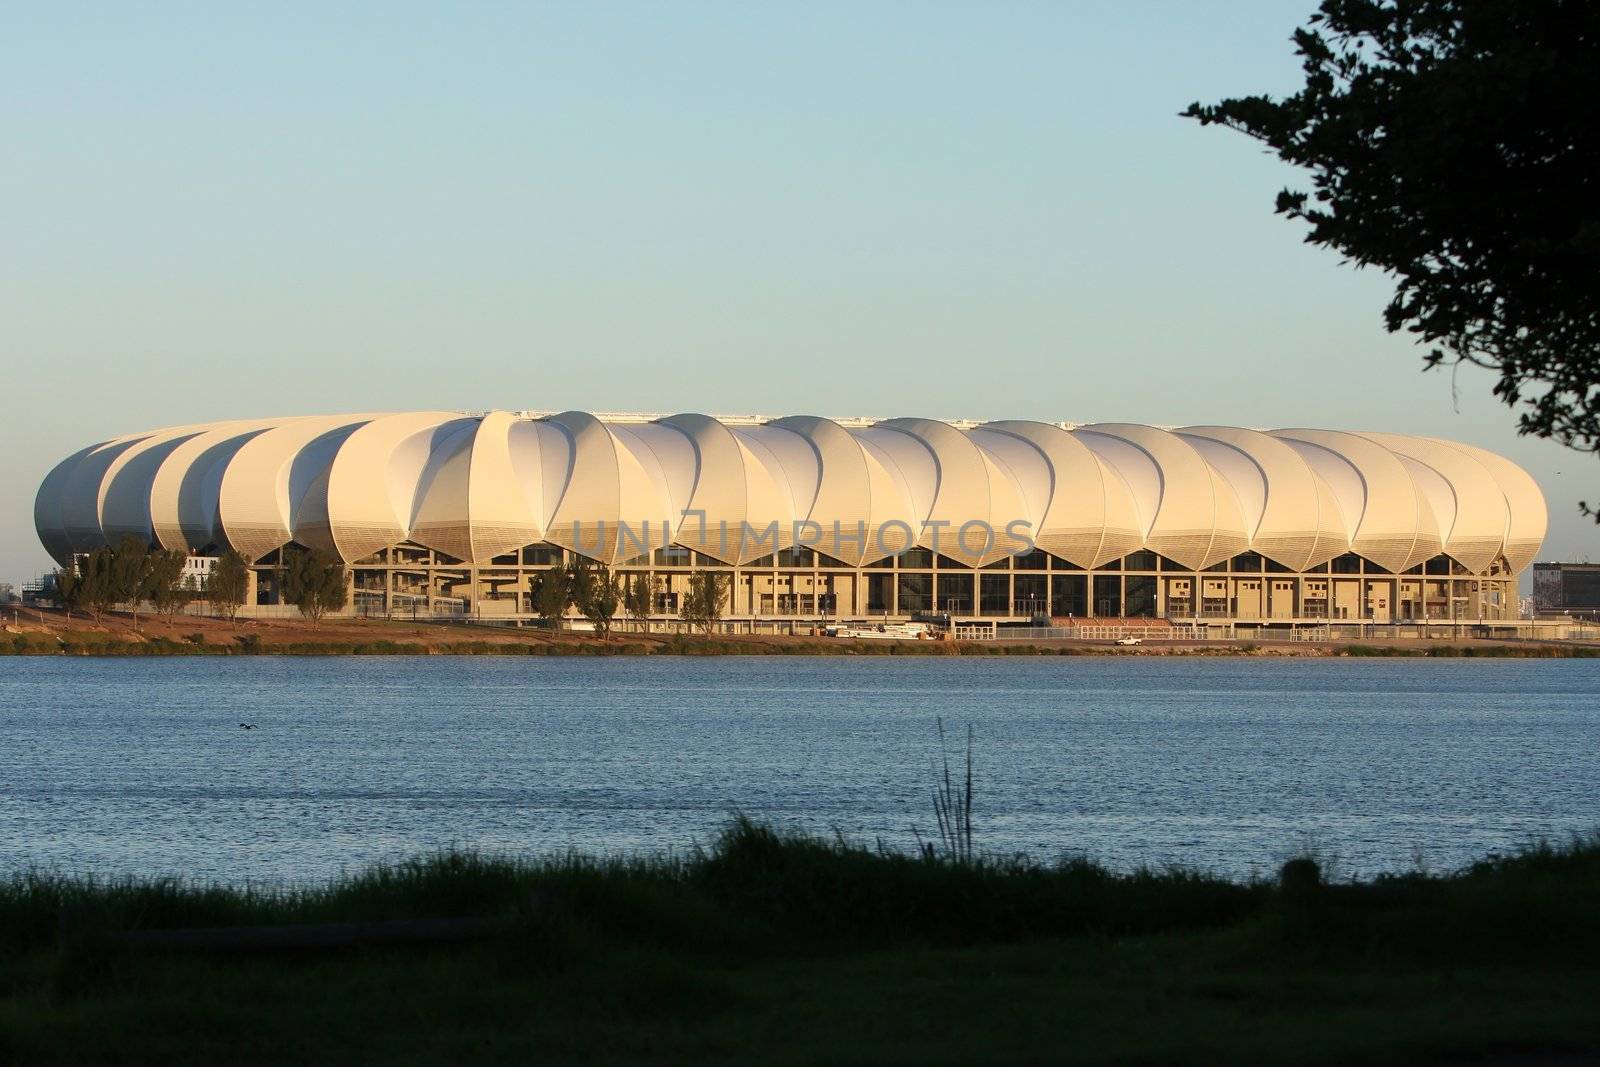 Soccer Stadium, Port Elizabeth, South Africa by fouroaks